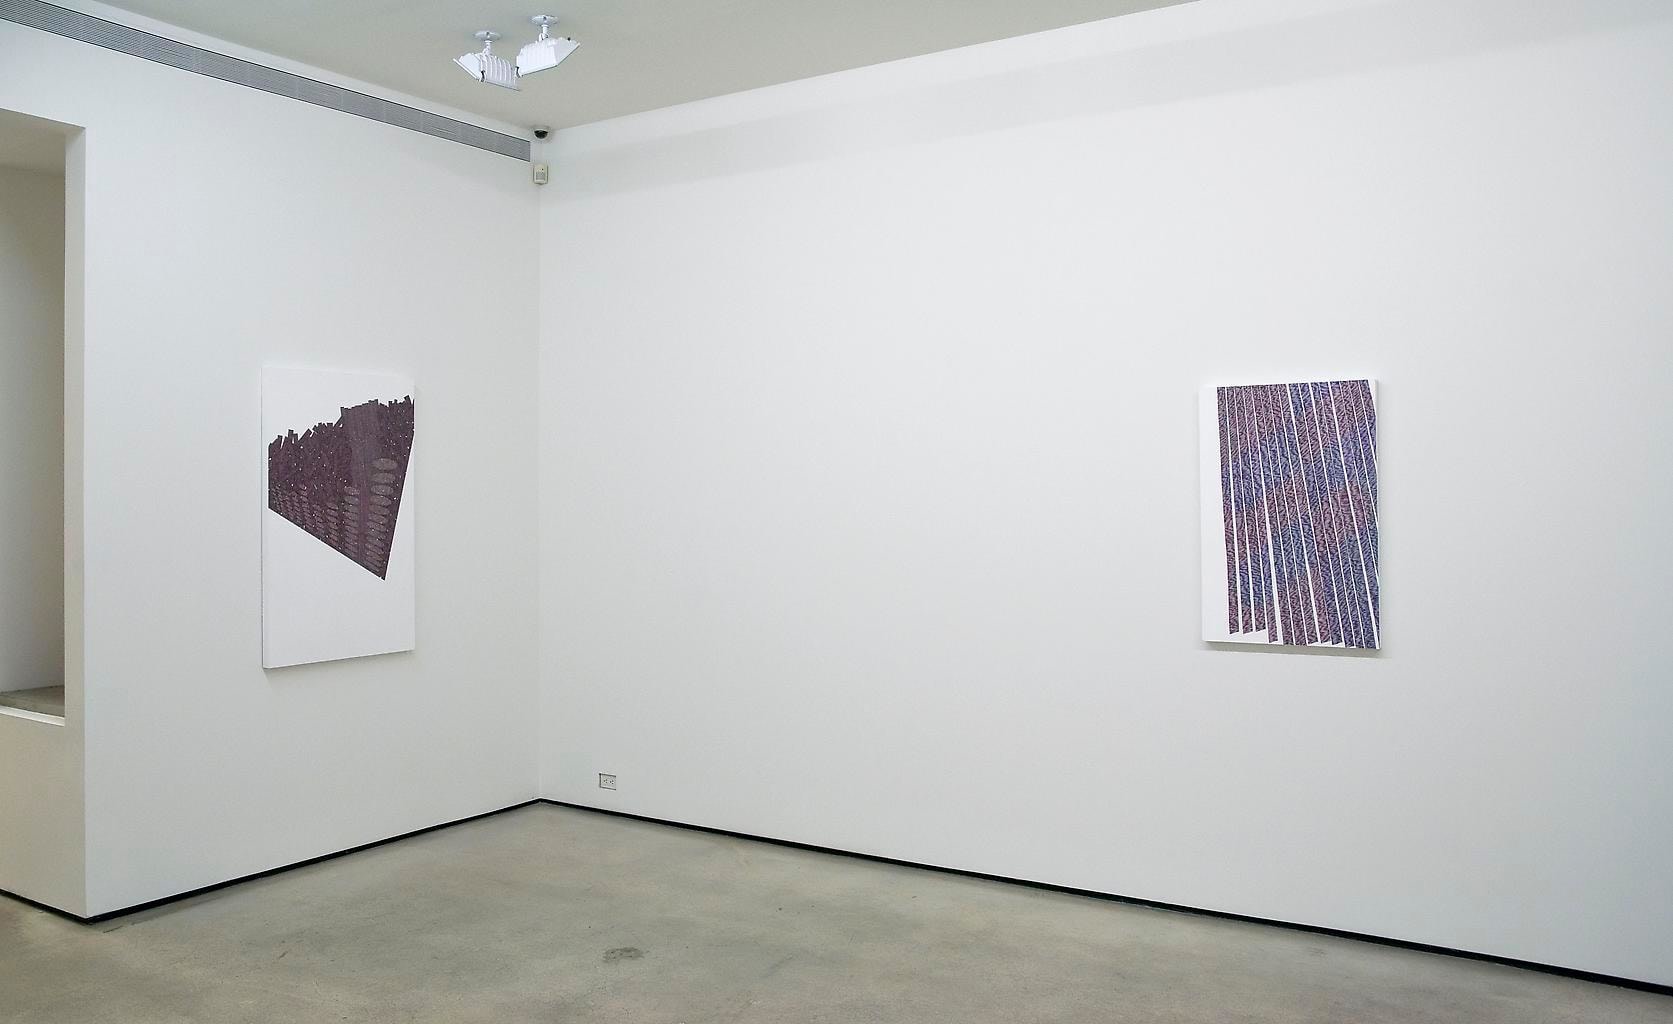  Installation view, Ginny Bishton, Marc Jancou, New York, October 29, 2011 - January 21, 2012